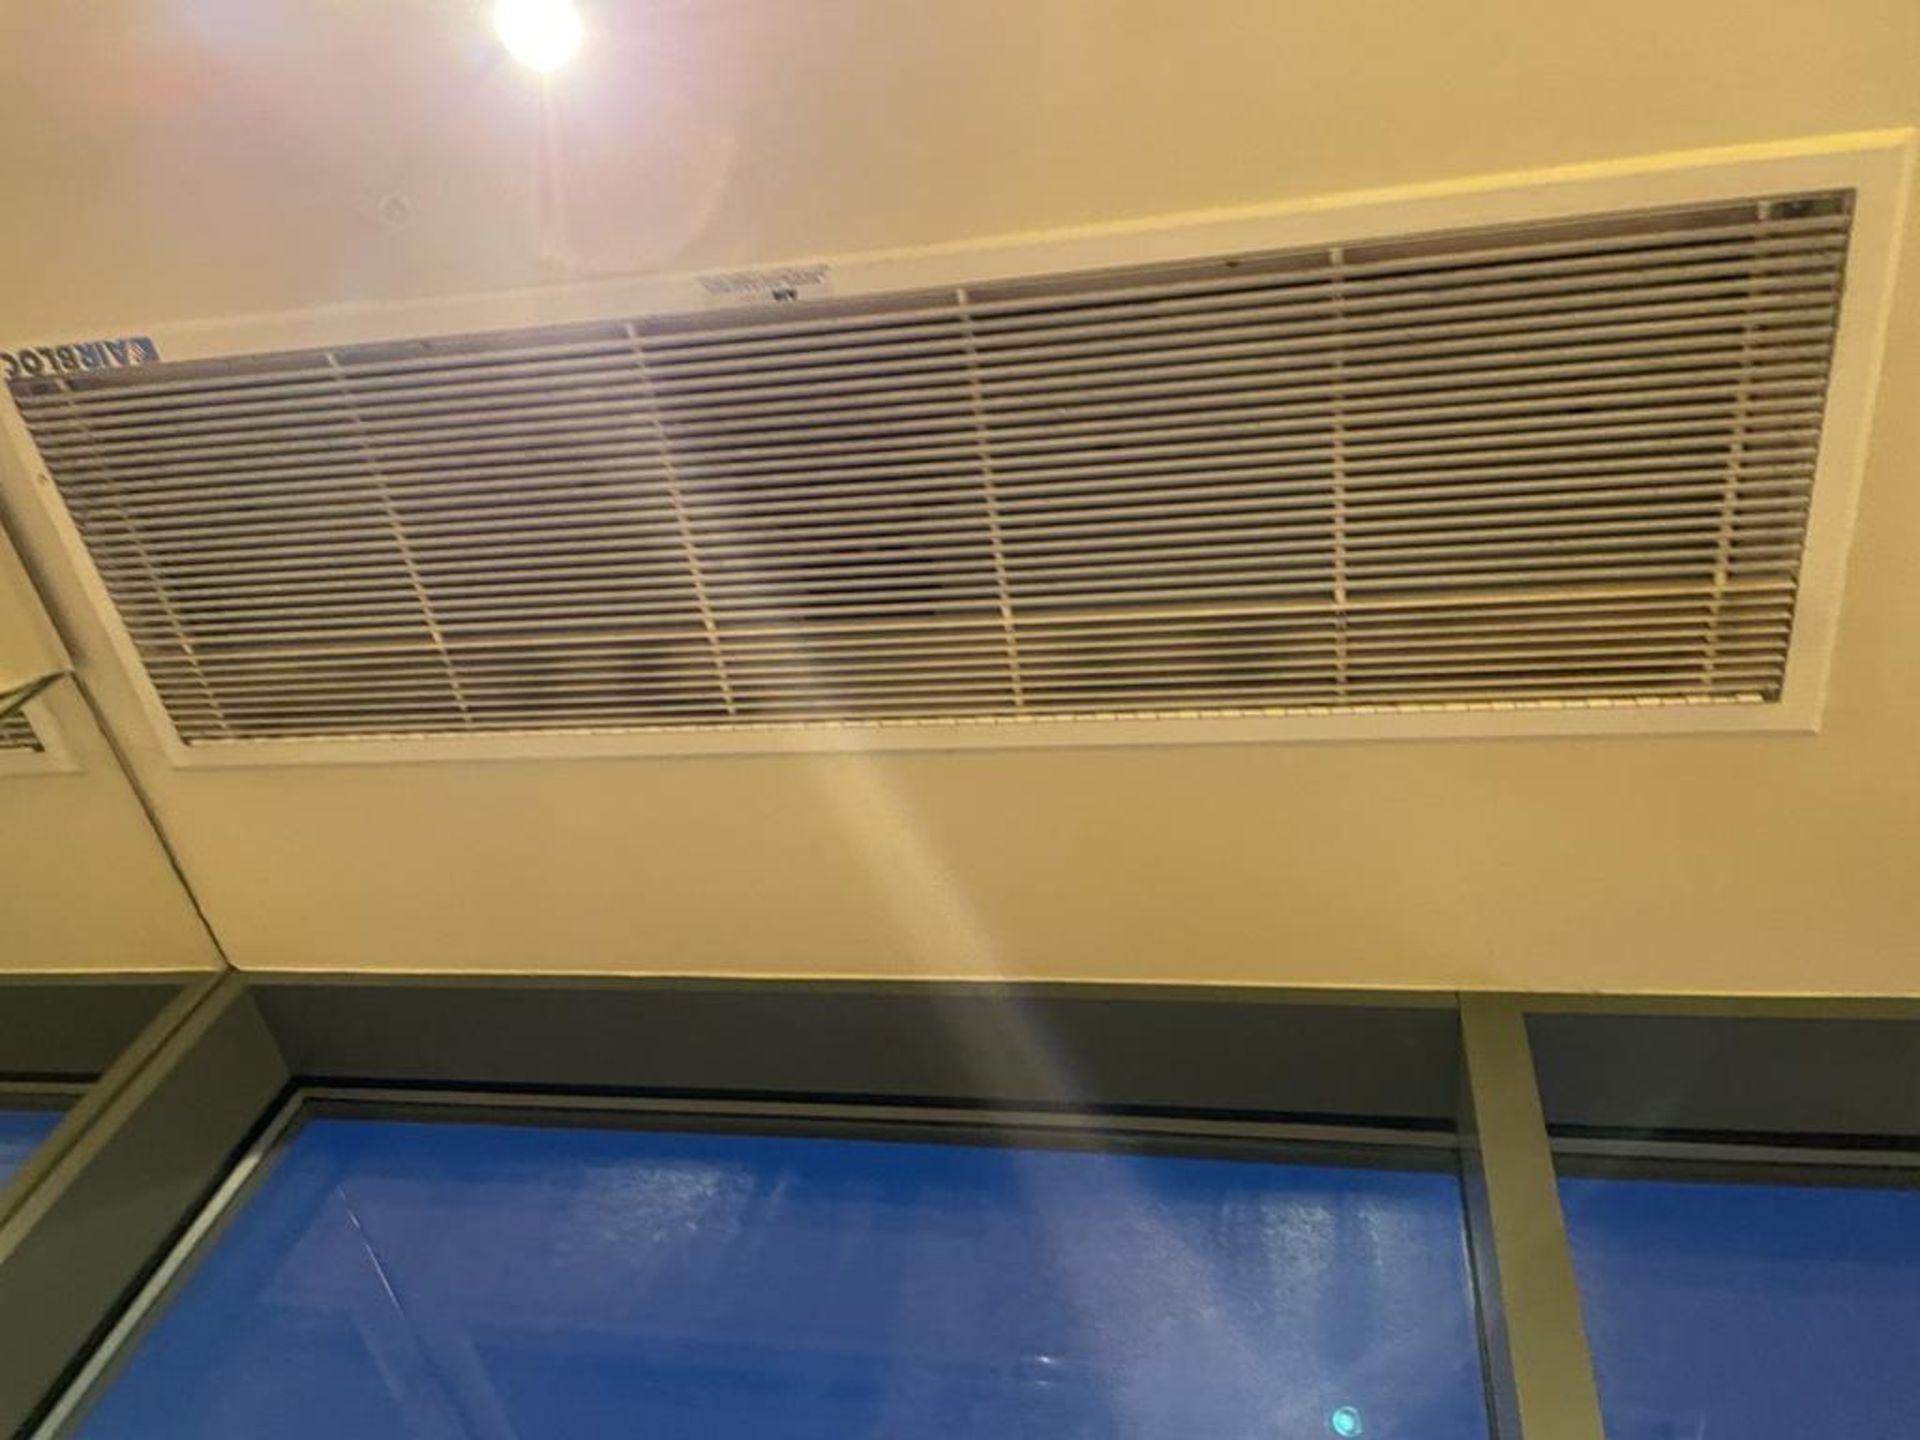 1 x Airbloc Overhead Curtain Heater -Ref: BK - CL686 - Location: - Image 2 of 2